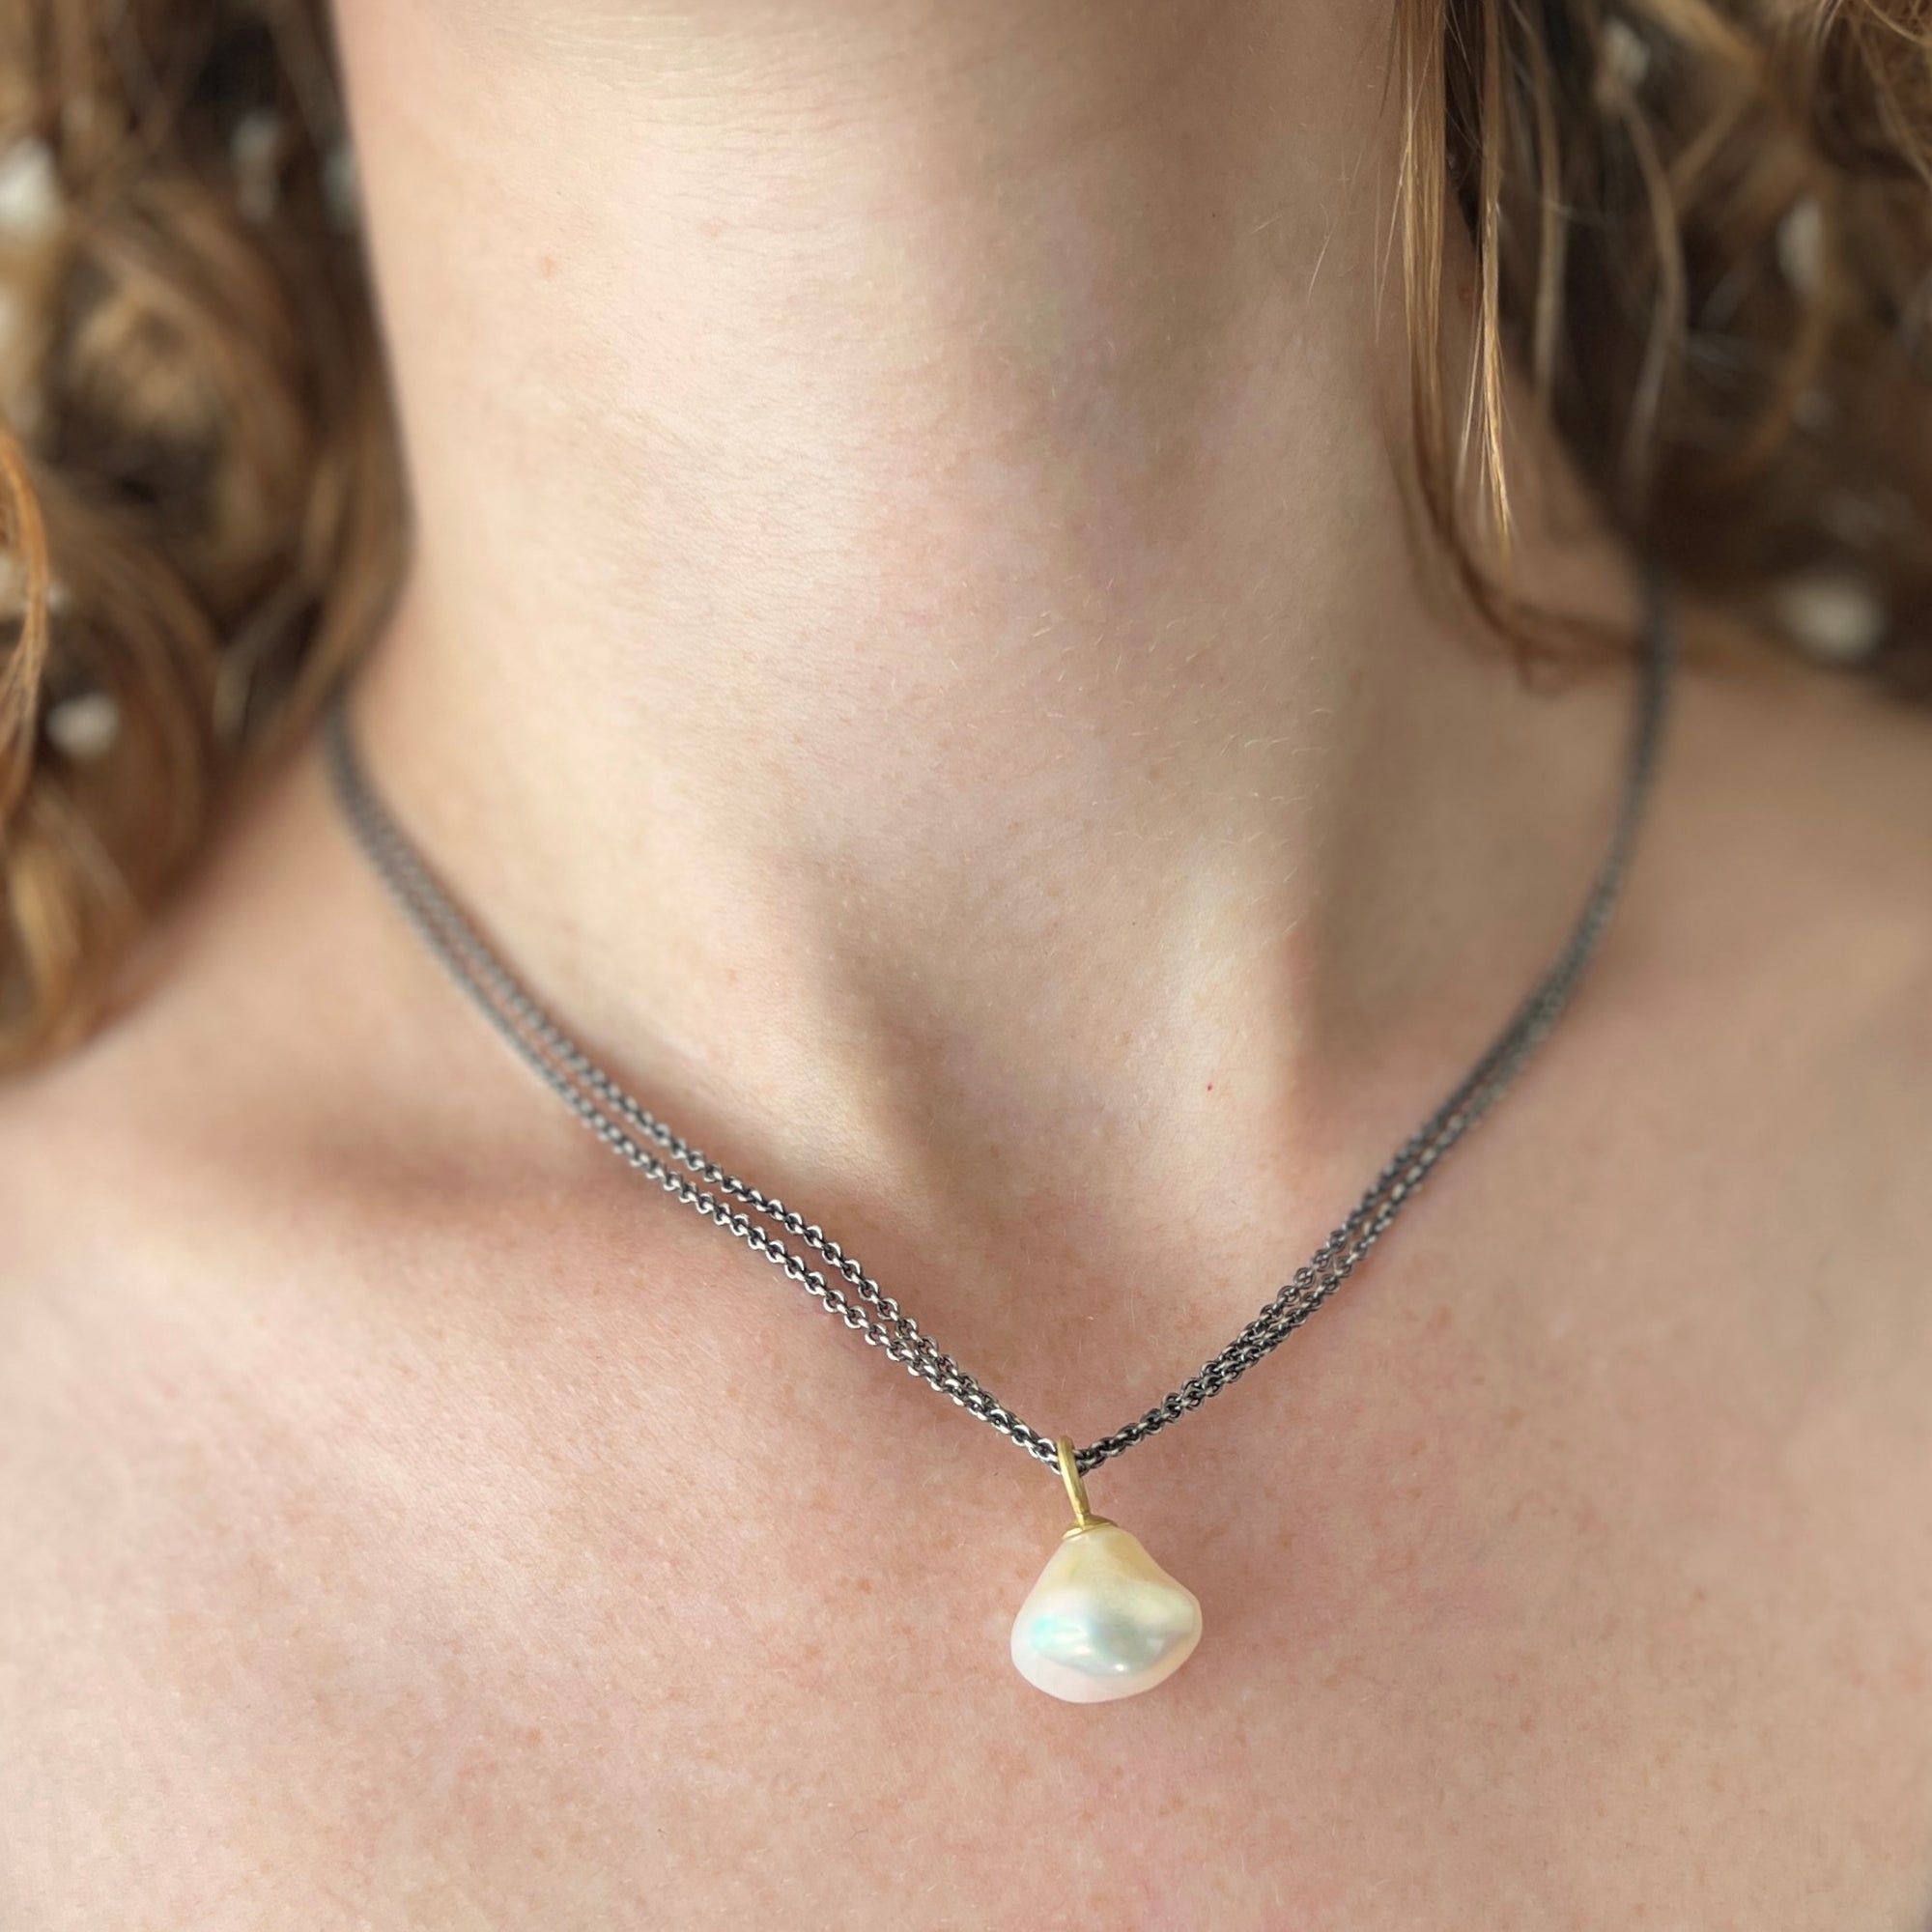 Little freshwater pearl pendant